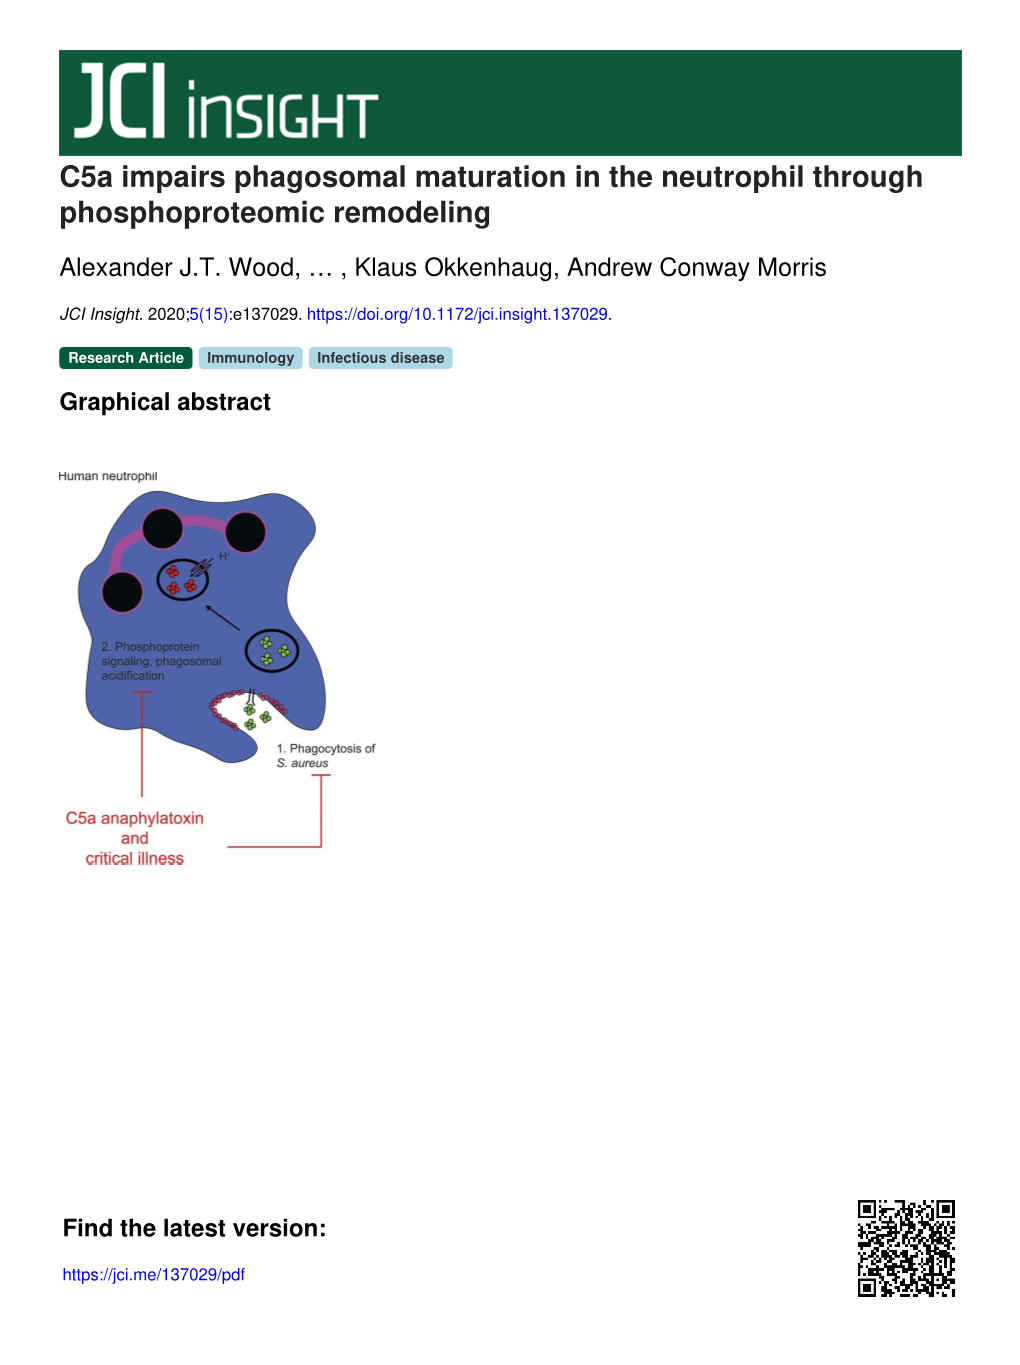 C5a Impairs Phagosomal Maturation in the Neutrophil Through Phosphoproteomic Remodeling